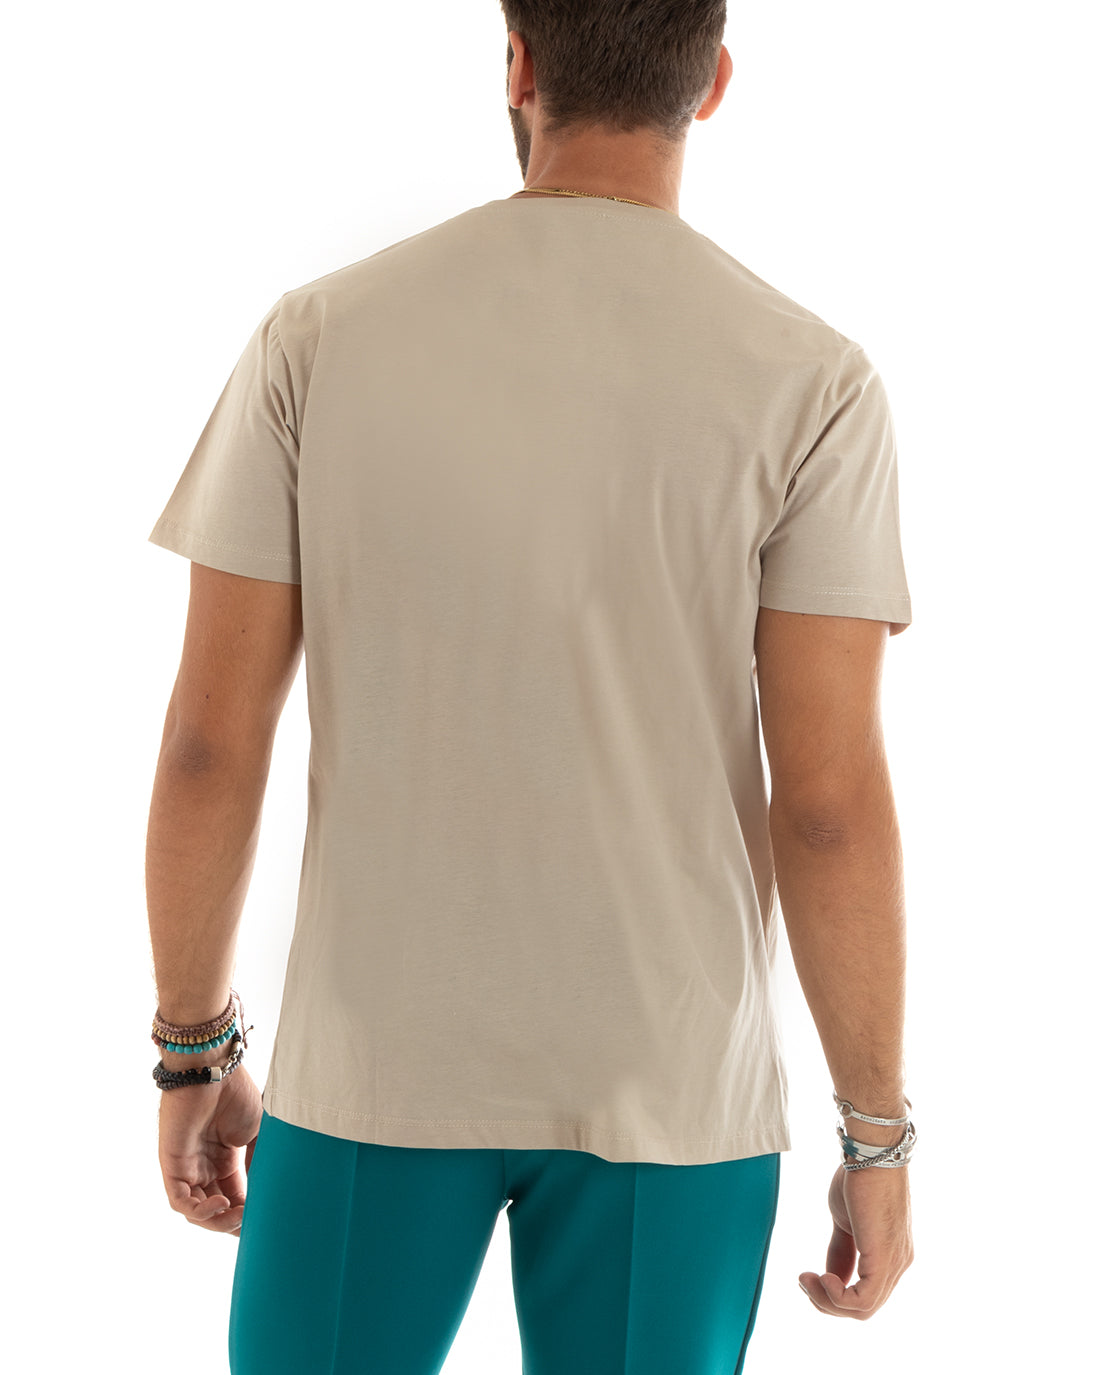 T-shirt Uomo Filo Di Scozia Basic Leggera Tinta Unita Beige Girocollo Casual GIOSAL-TS2978A